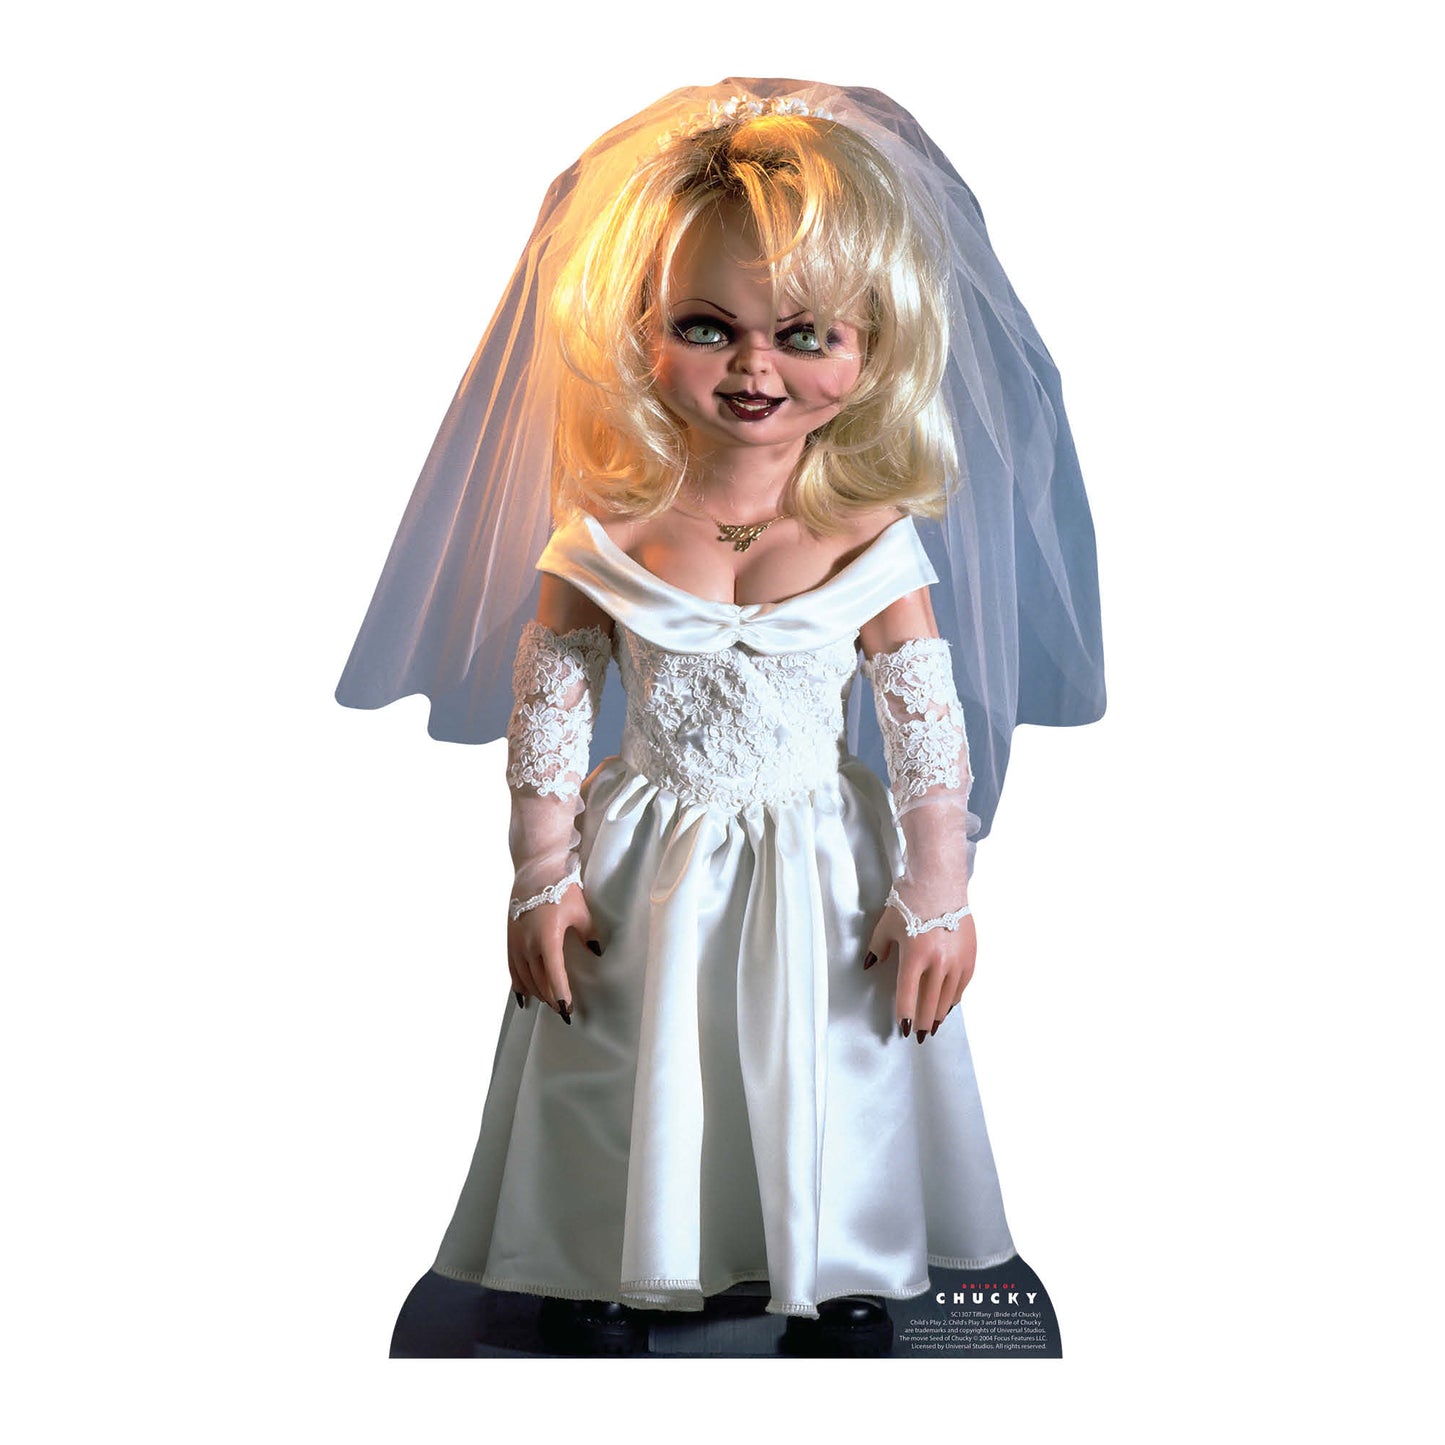 SC1307 Tiffany Doll Bride of Chucky Cardboard Cut Out Height 75cm - Star Cutouts